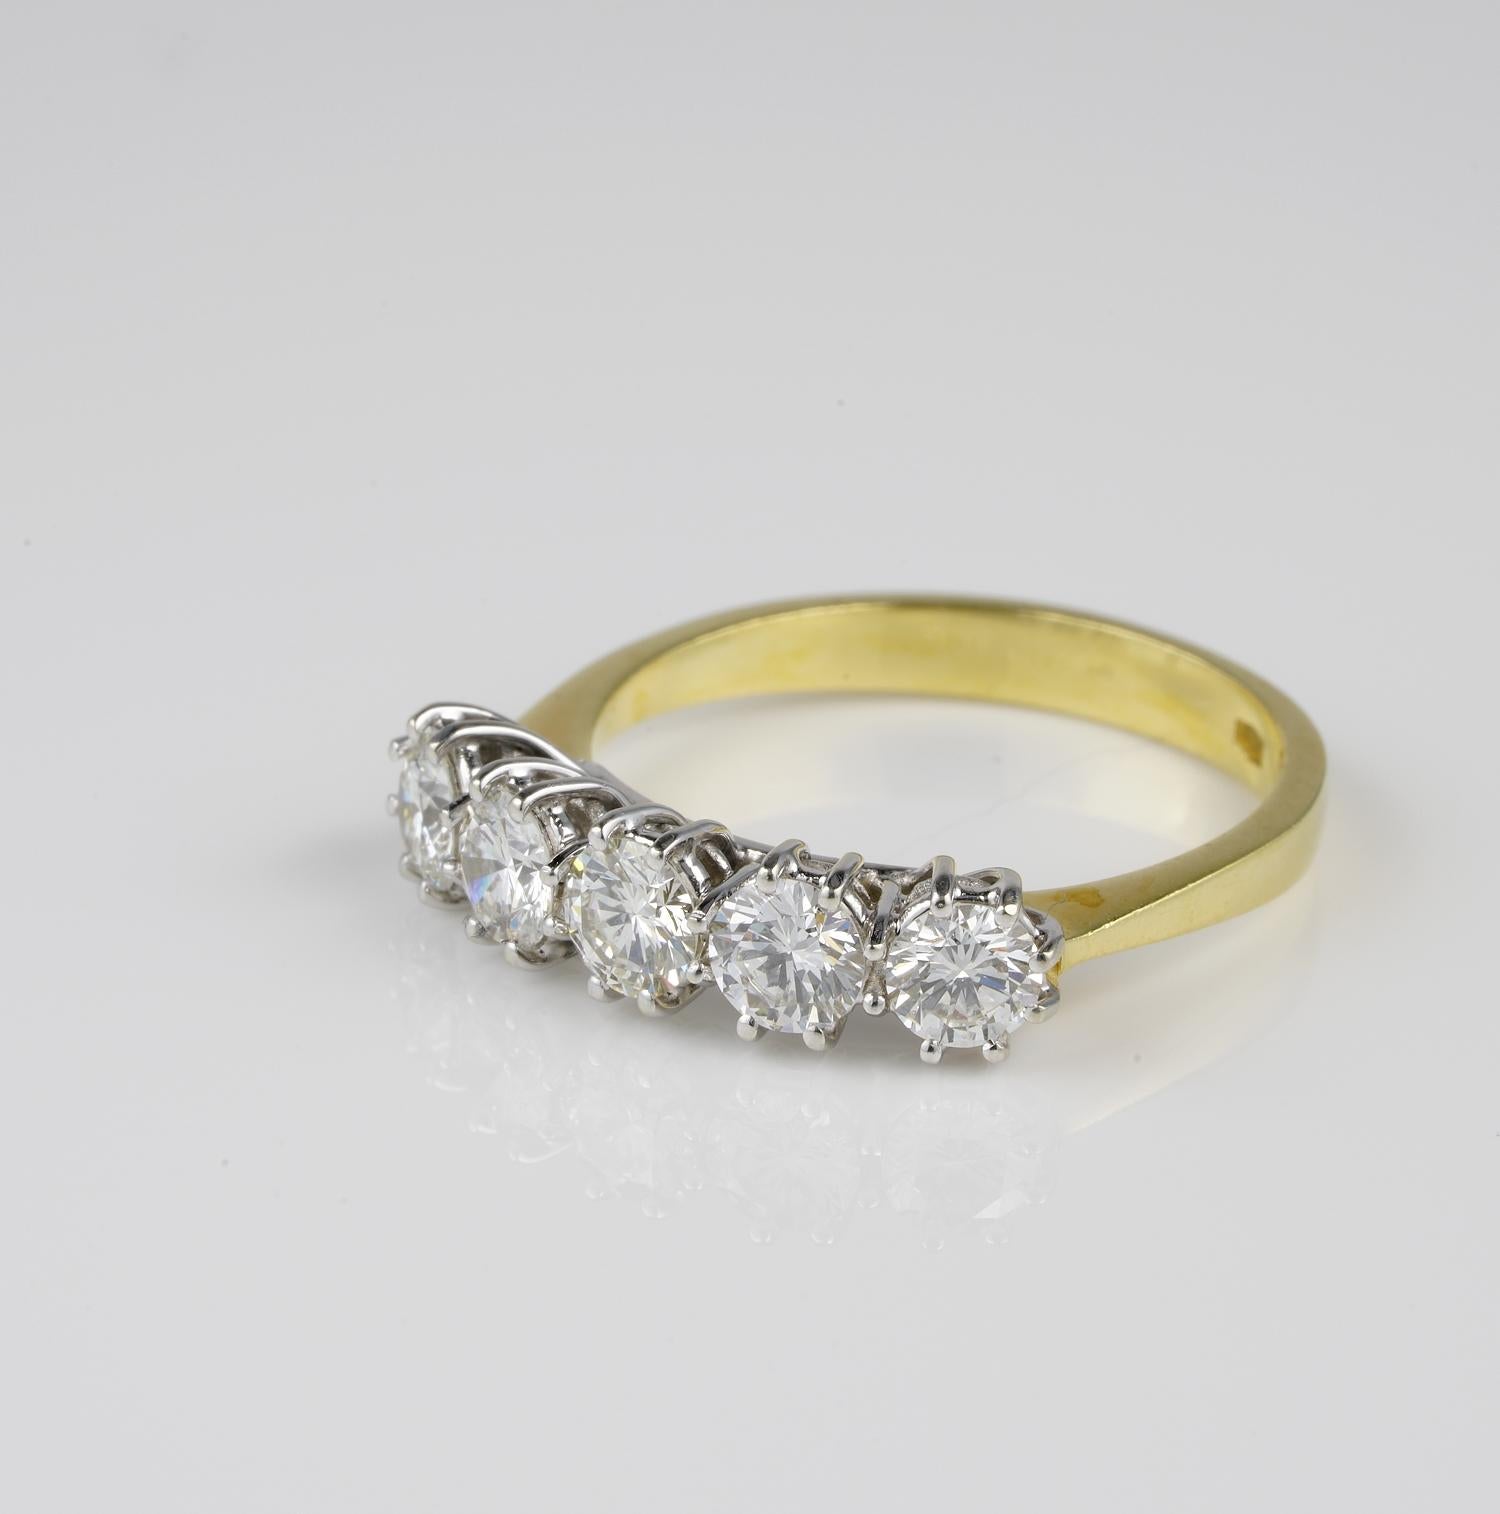  Vintage Five-Stone Diamond Ring (Retro)